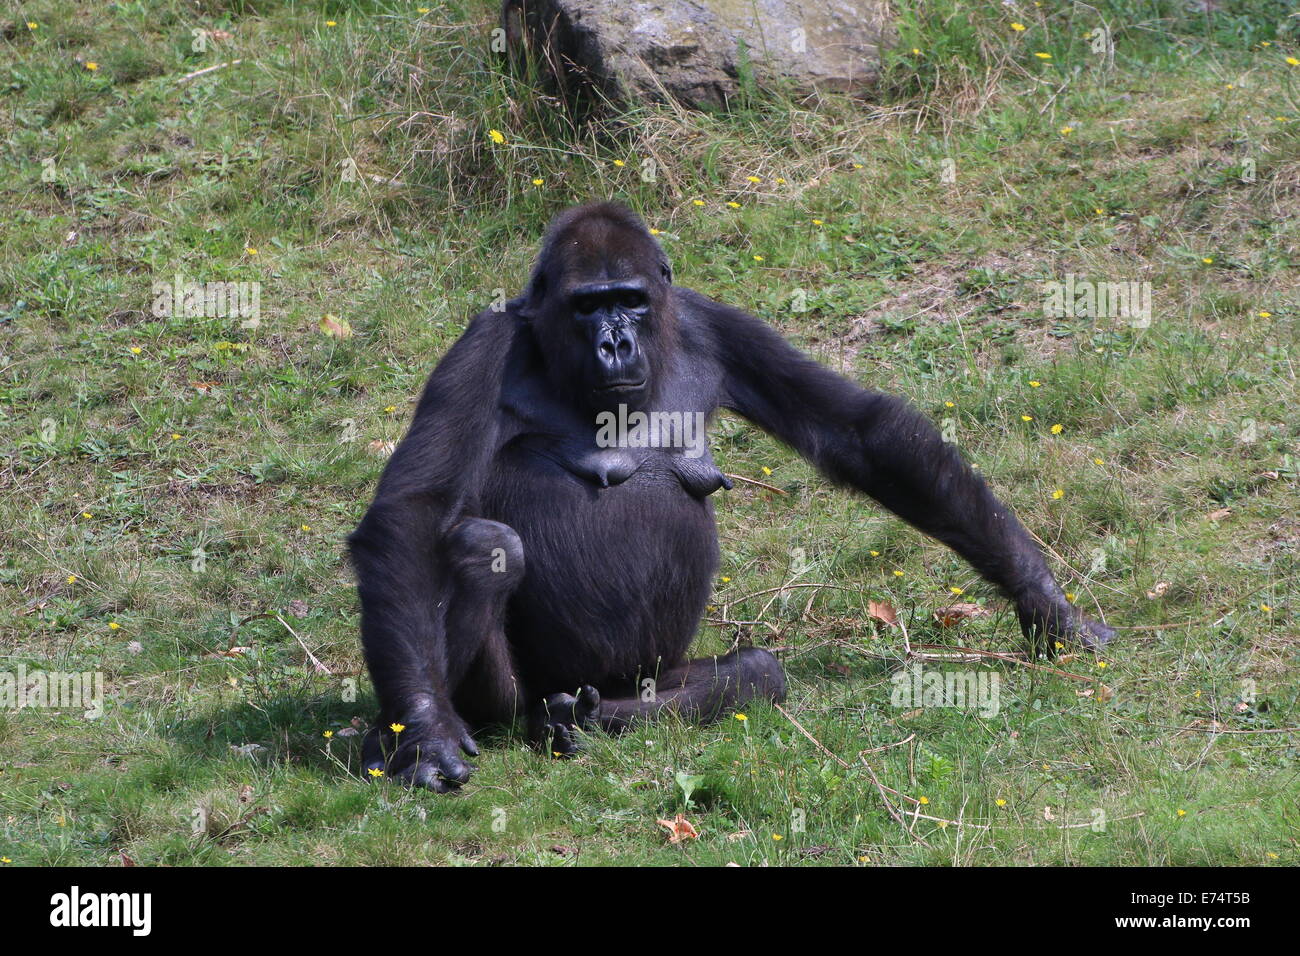 Female gorilla at Apenheul zoo, The Netherlands Stock Photo